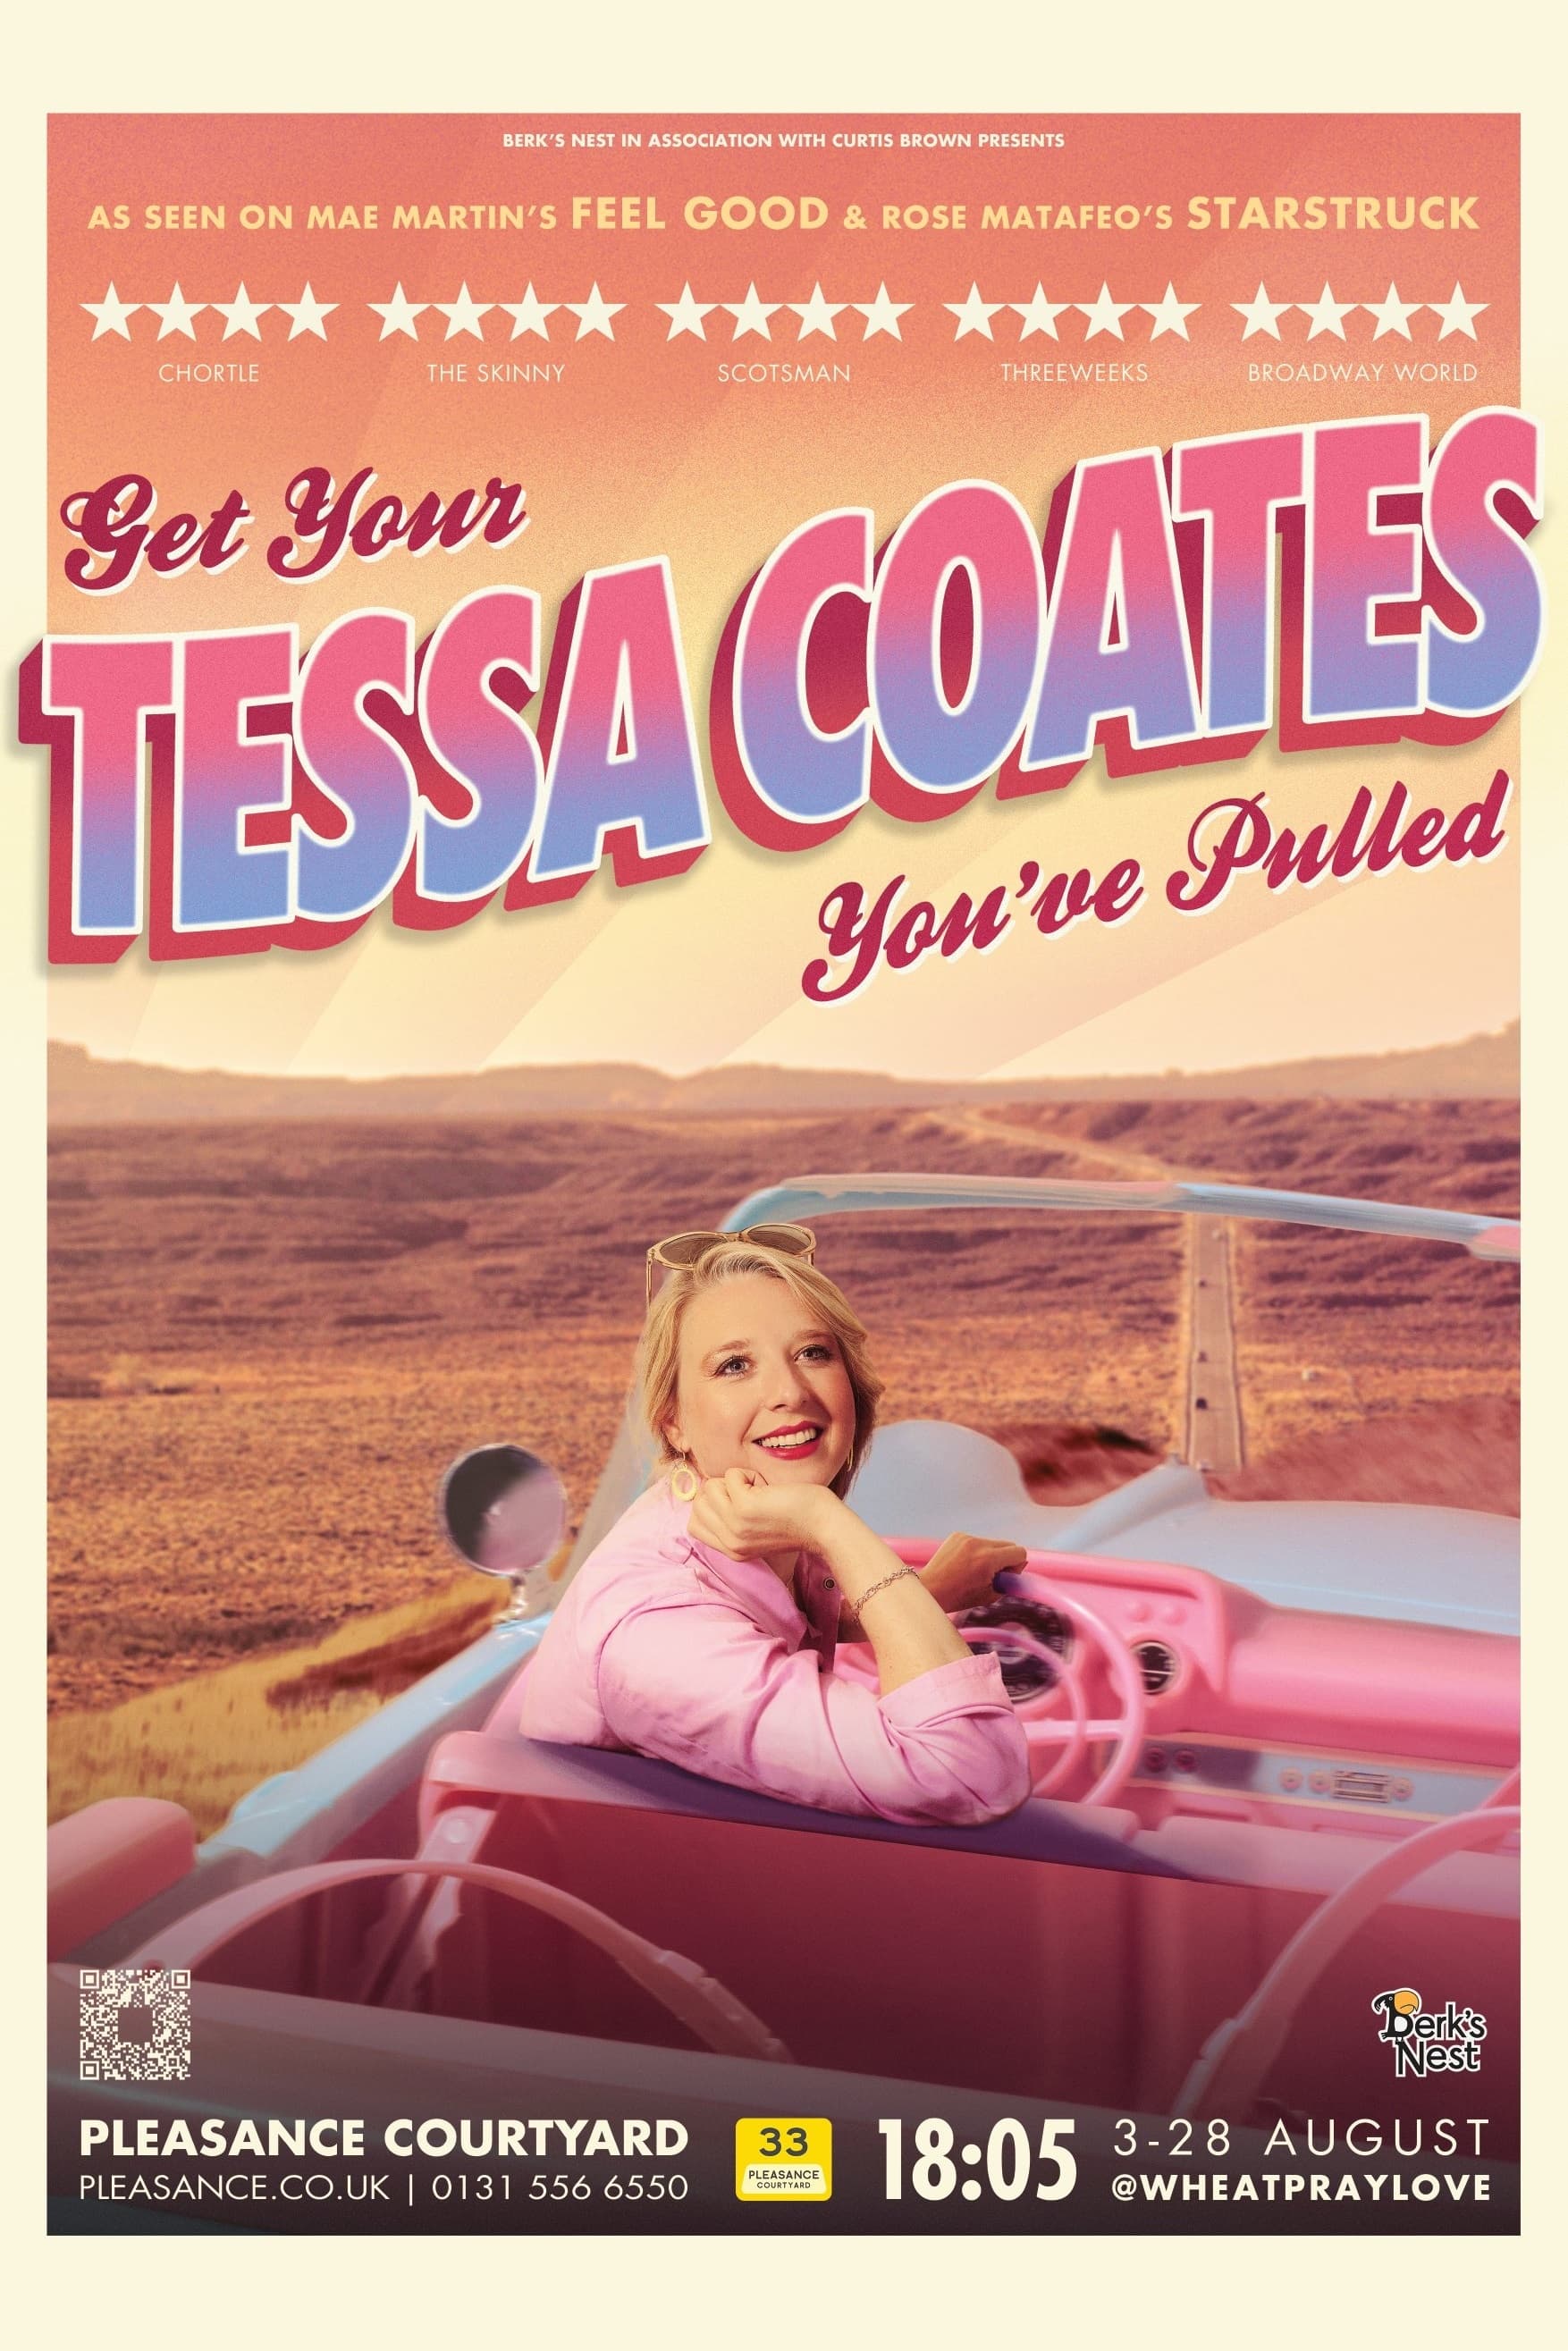 Tessa Coates: Get Your Tessa Coates You've Pulled